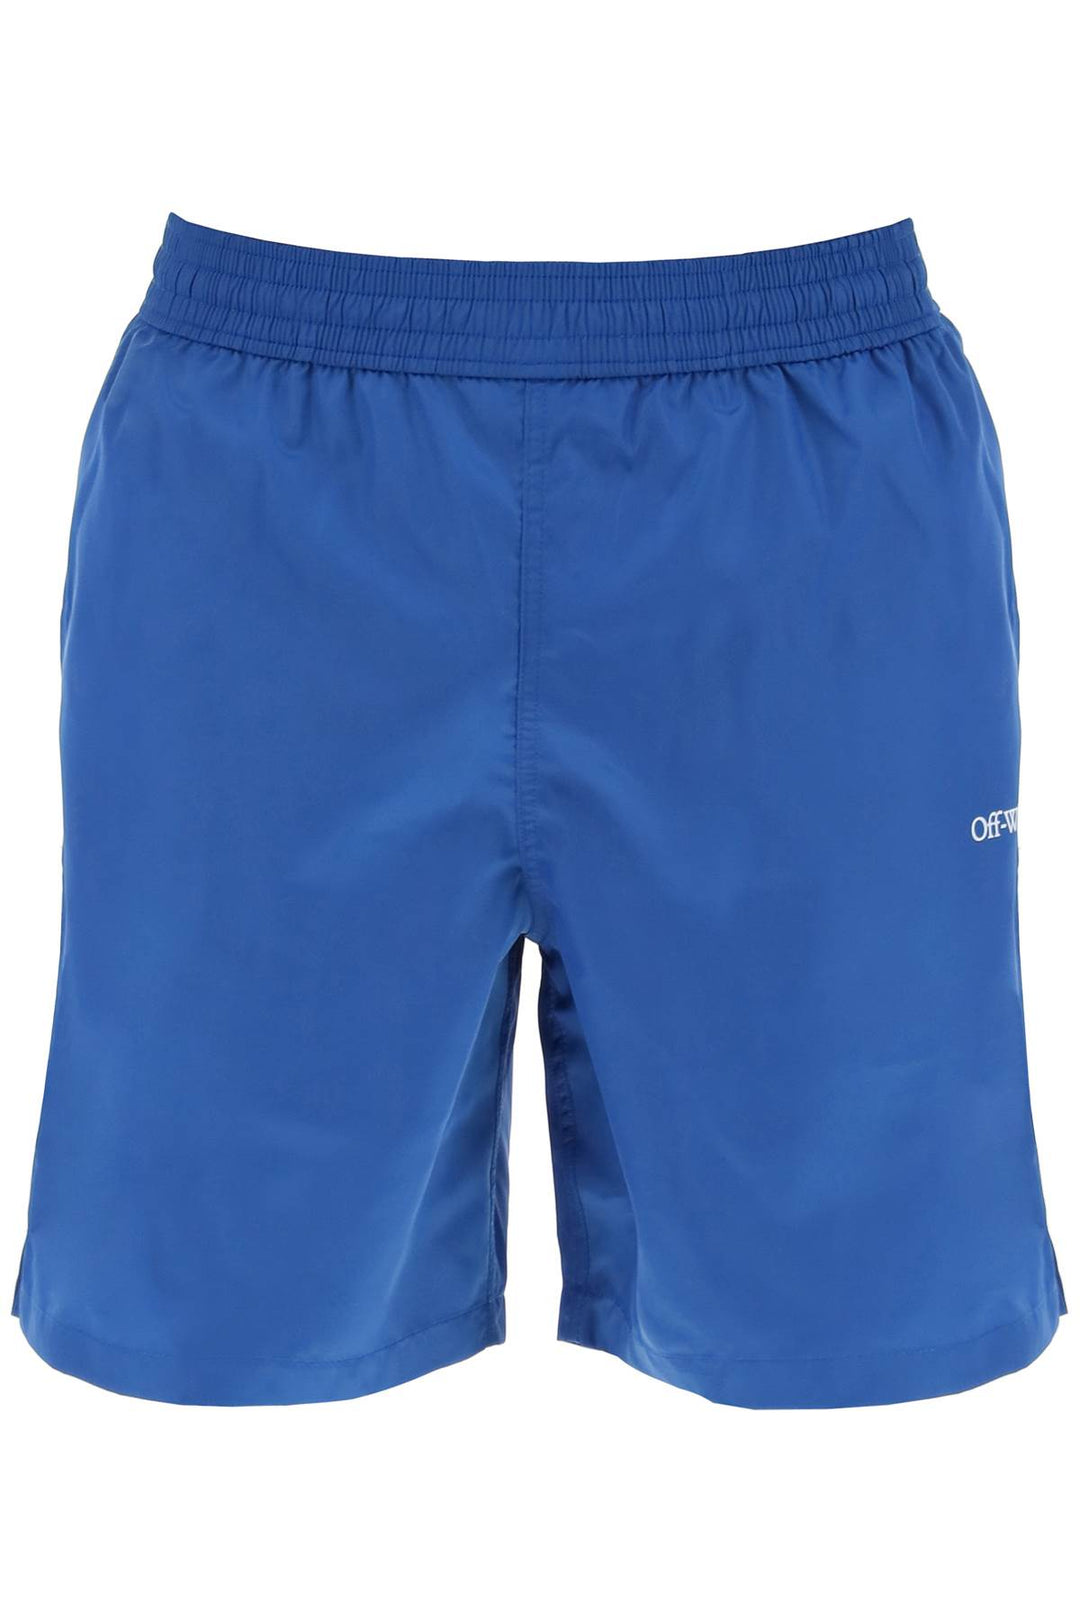 Off White Surfer Sea Bermuda Shorts   Blu